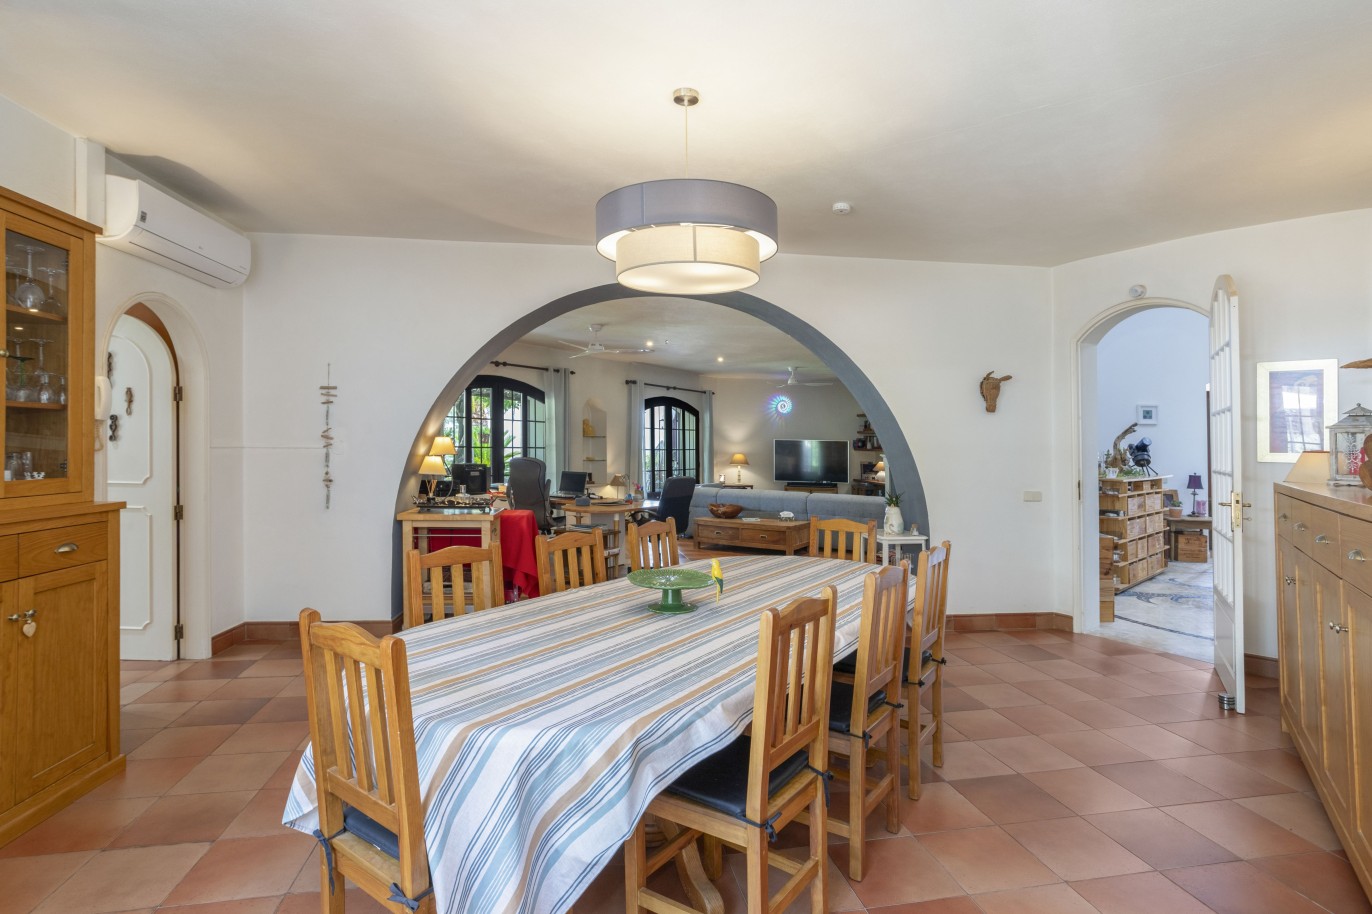 7 Bed Country Villa with swimming pool for sale in Estoi, Algarve_230954